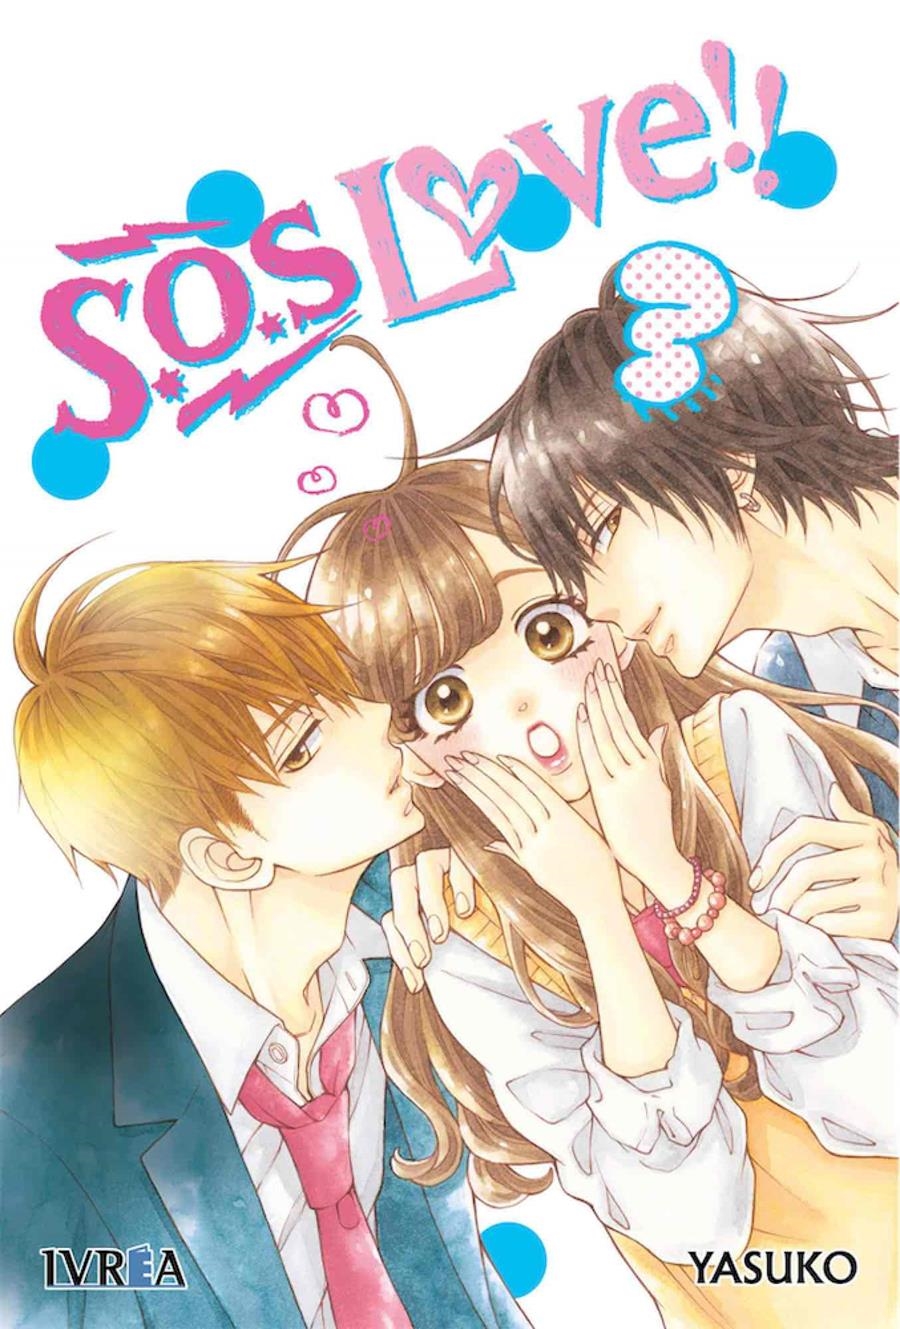 S.O.S. LOVE Nº03 (3 DE 7) [RUSTICA] | YASUKO | Akira Comics  - libreria donde comprar comics, juegos y libros online